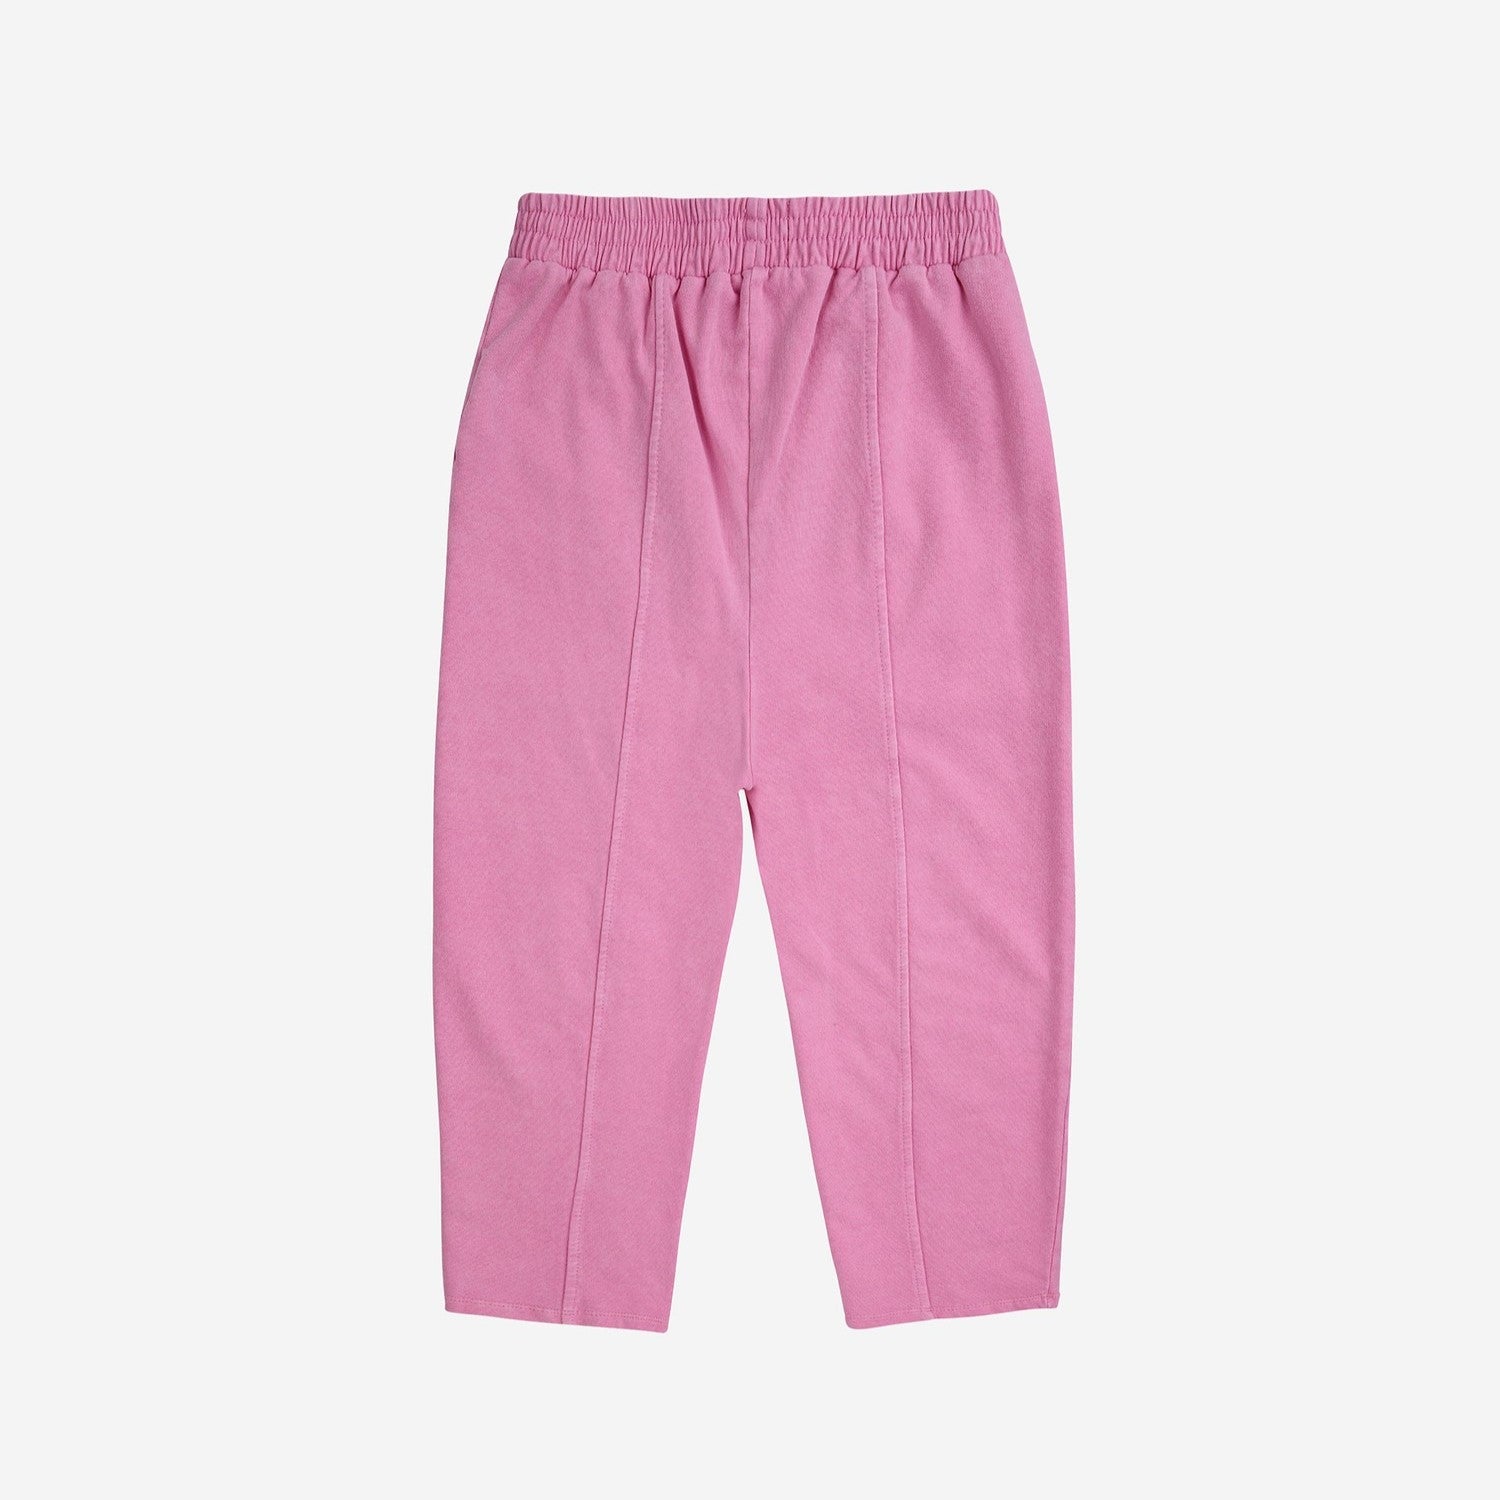 BOBO CHOSES B.C Pink Jogging Pants ALWAYS SHOW